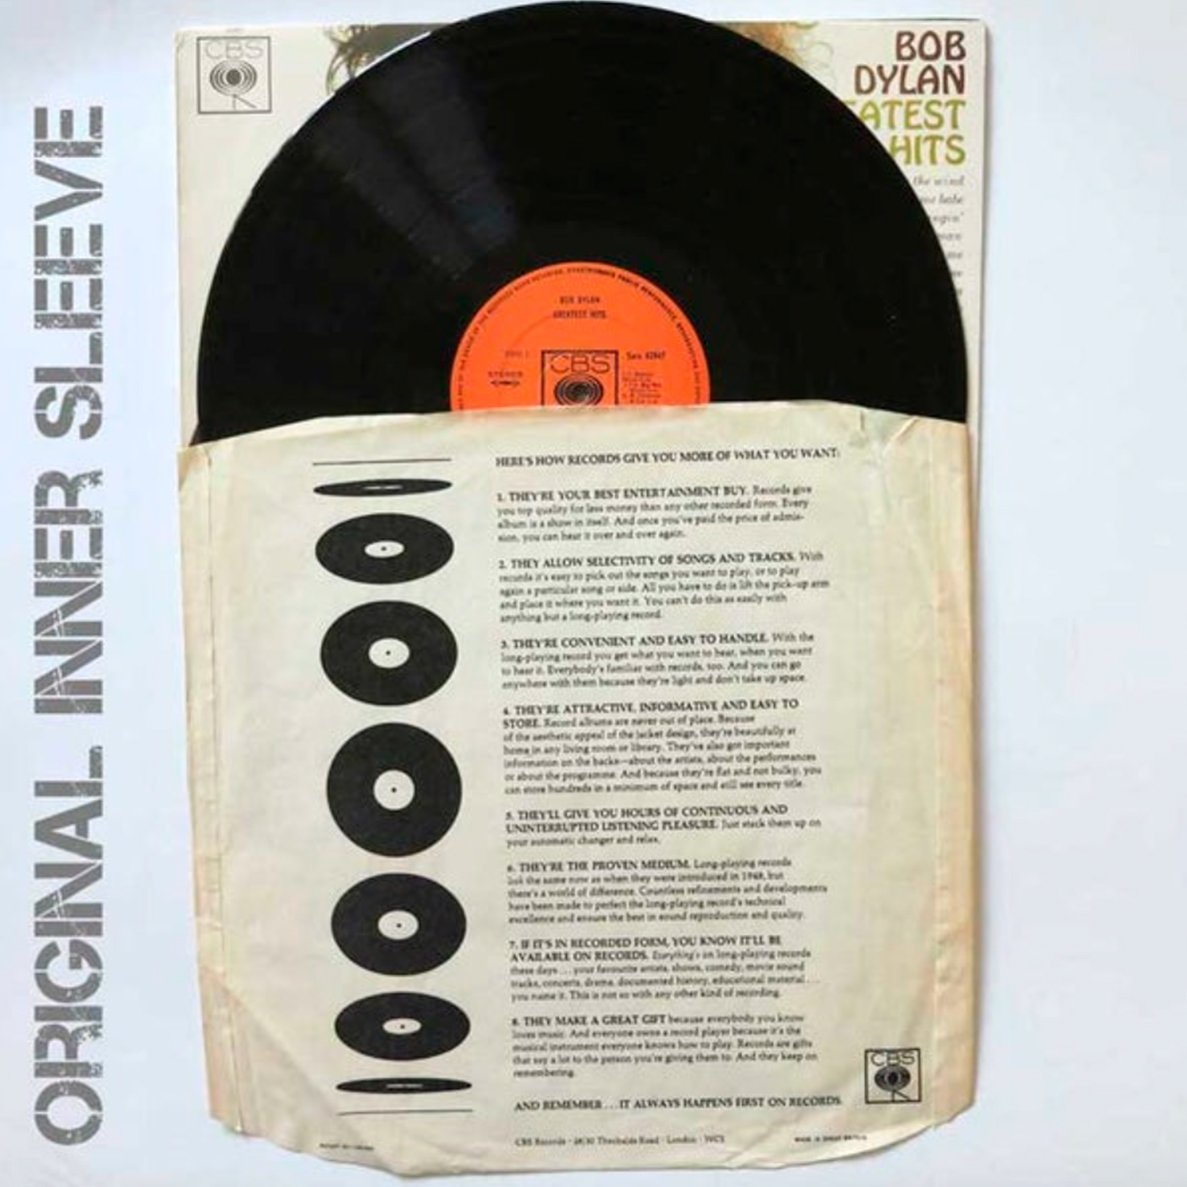 1960s Vinyl Record Manifesto - The Sense of Doubt